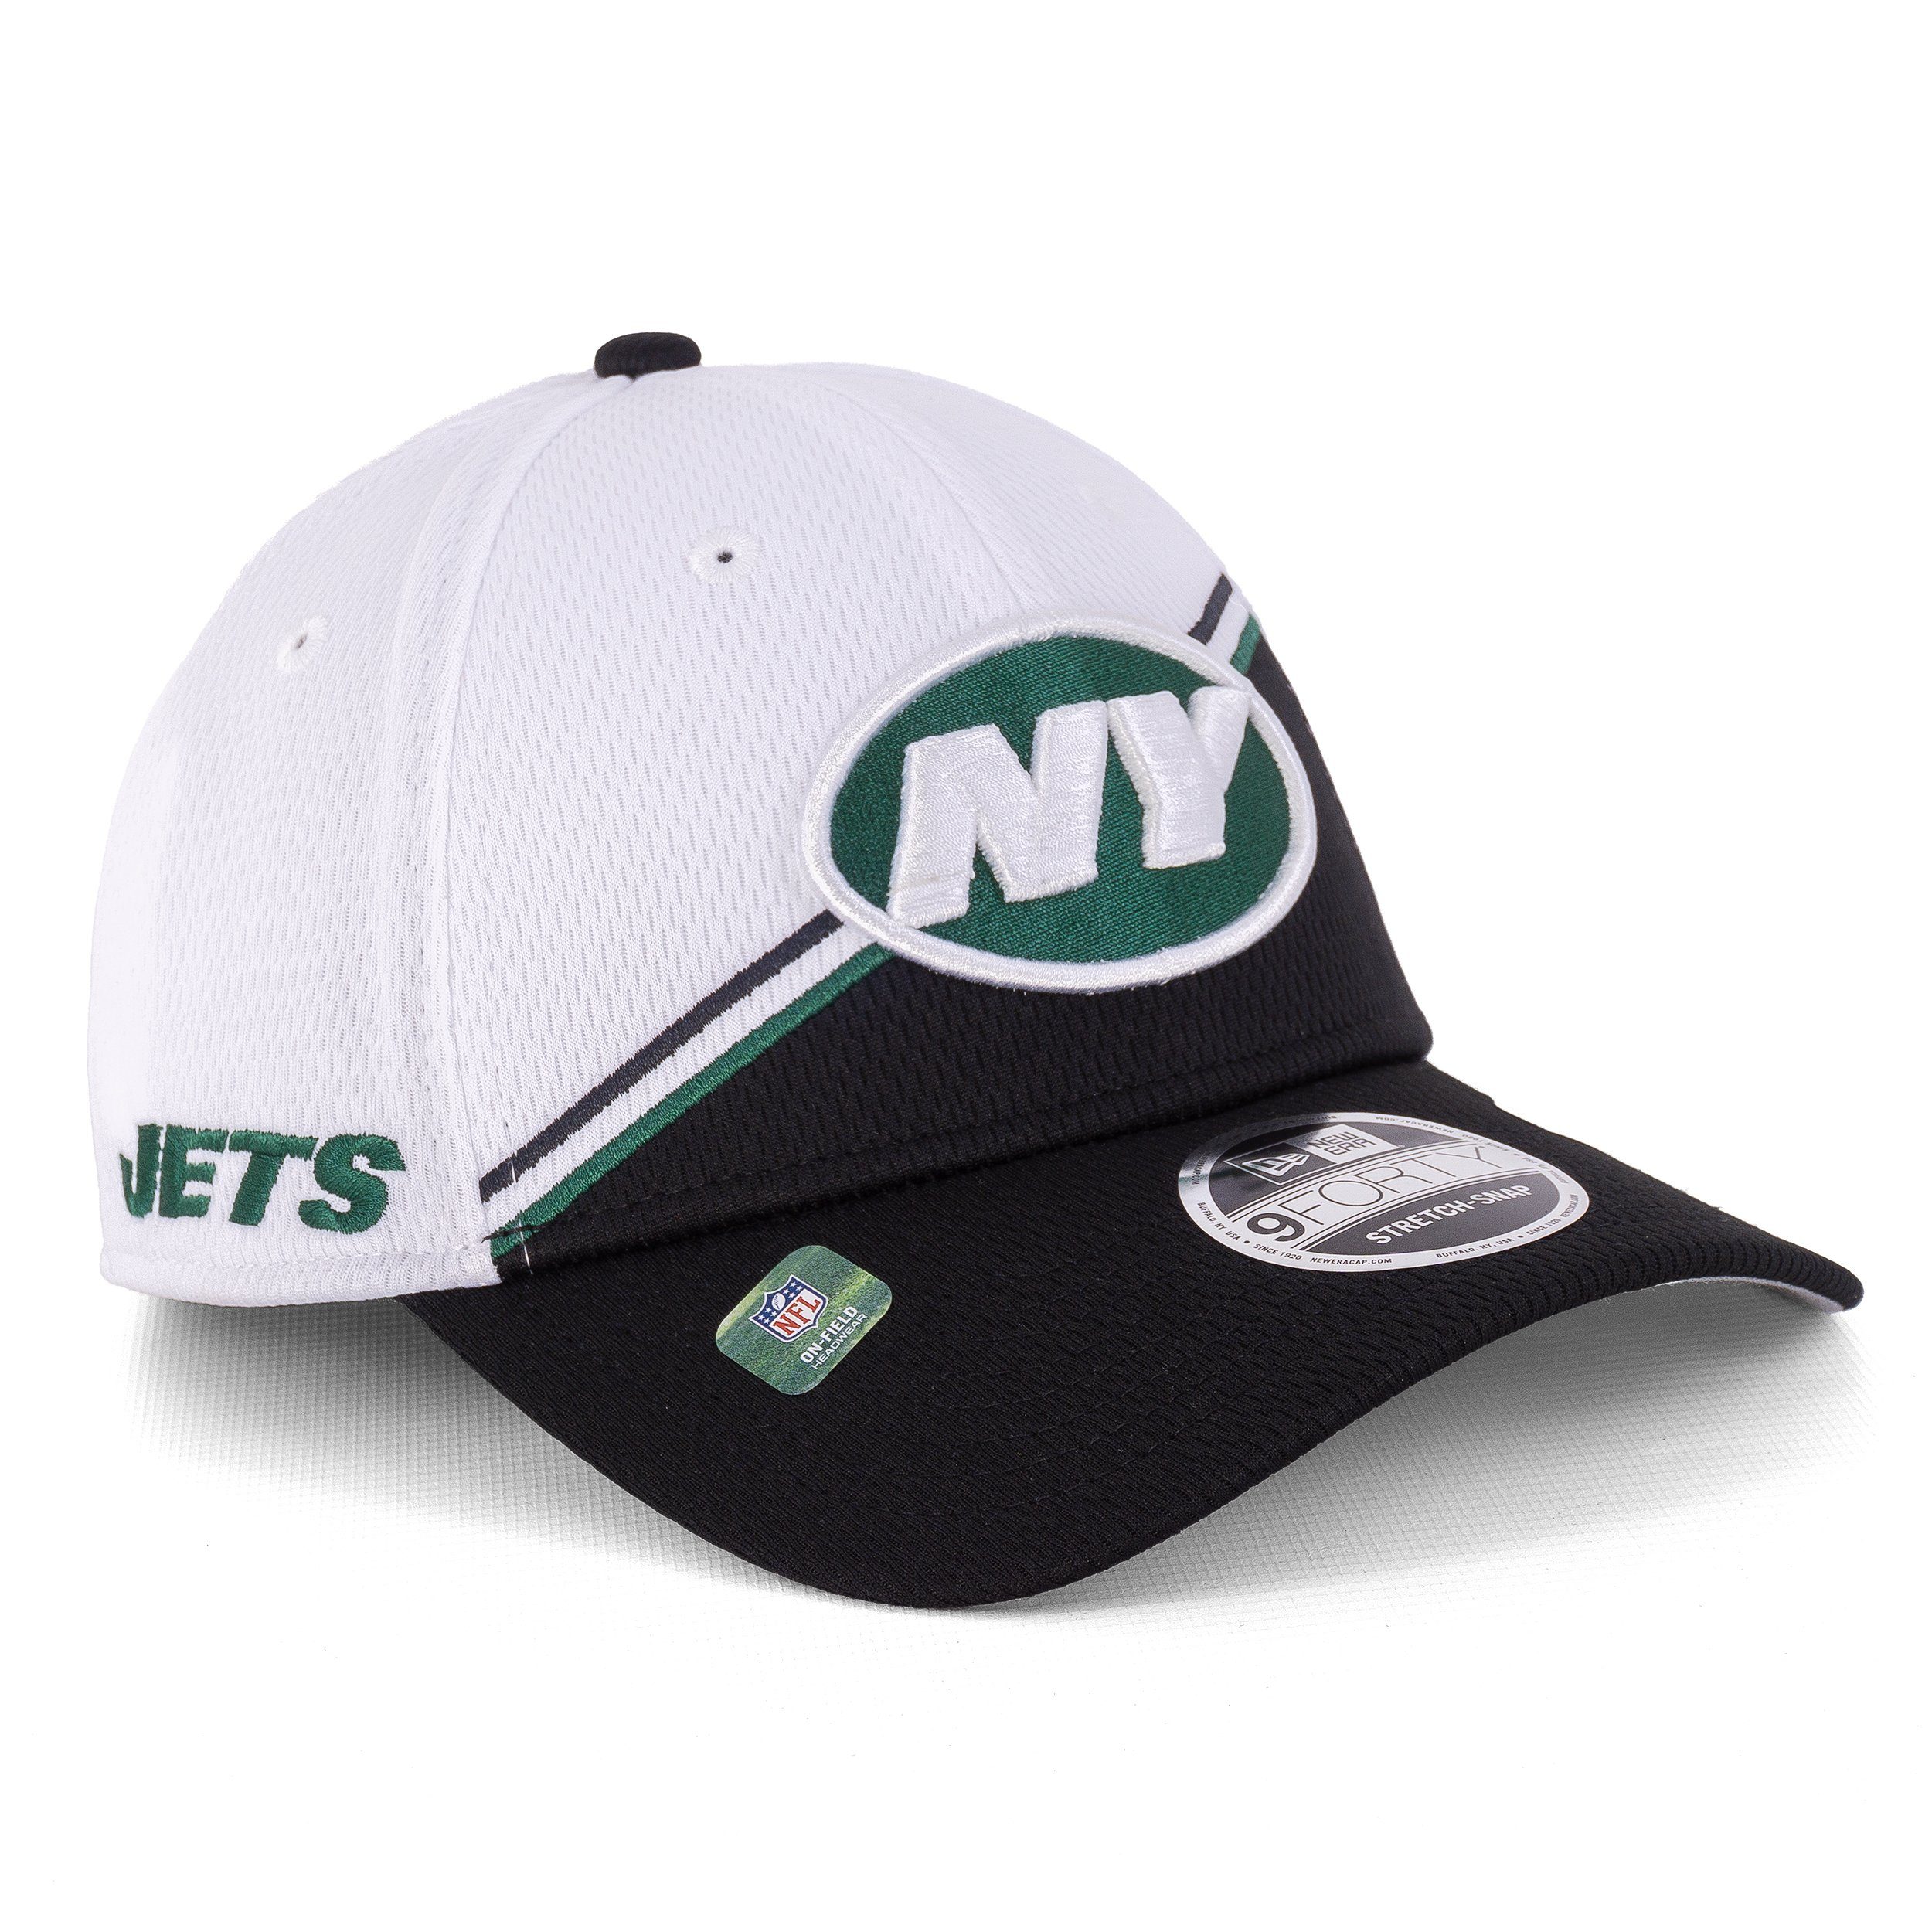 Cap New New Cap 9Forty York Era Jets Baseball SL23 New Era (1-St) NFL